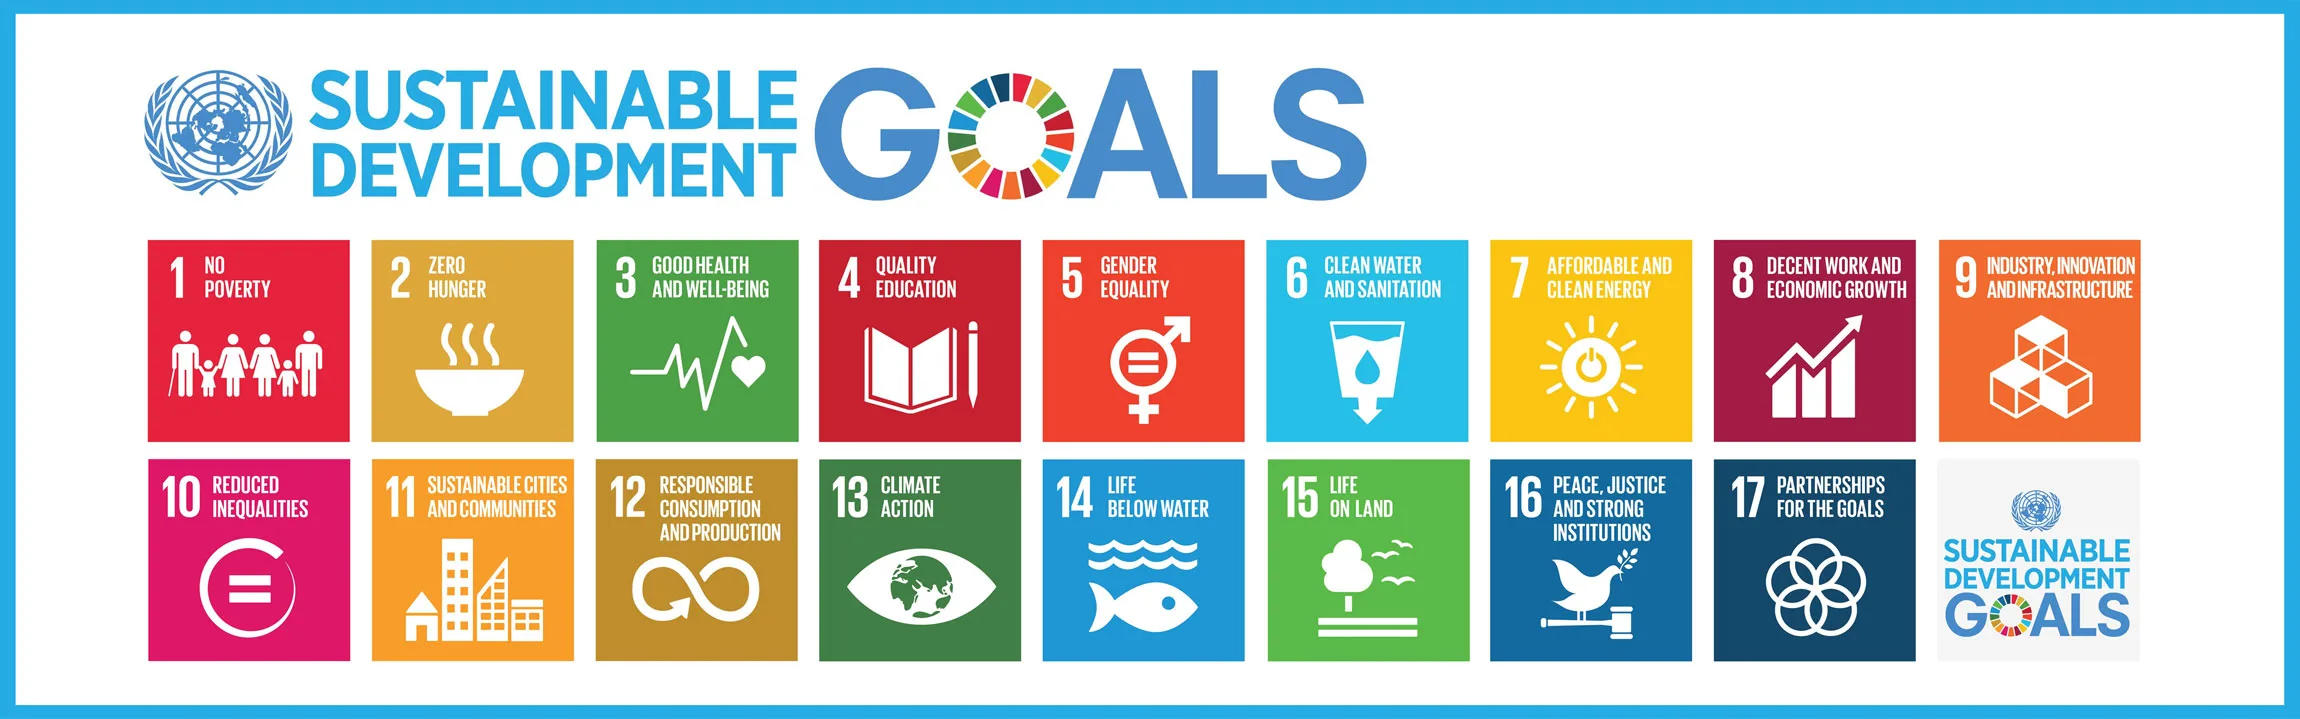 UNWTO sustainable development goals listing